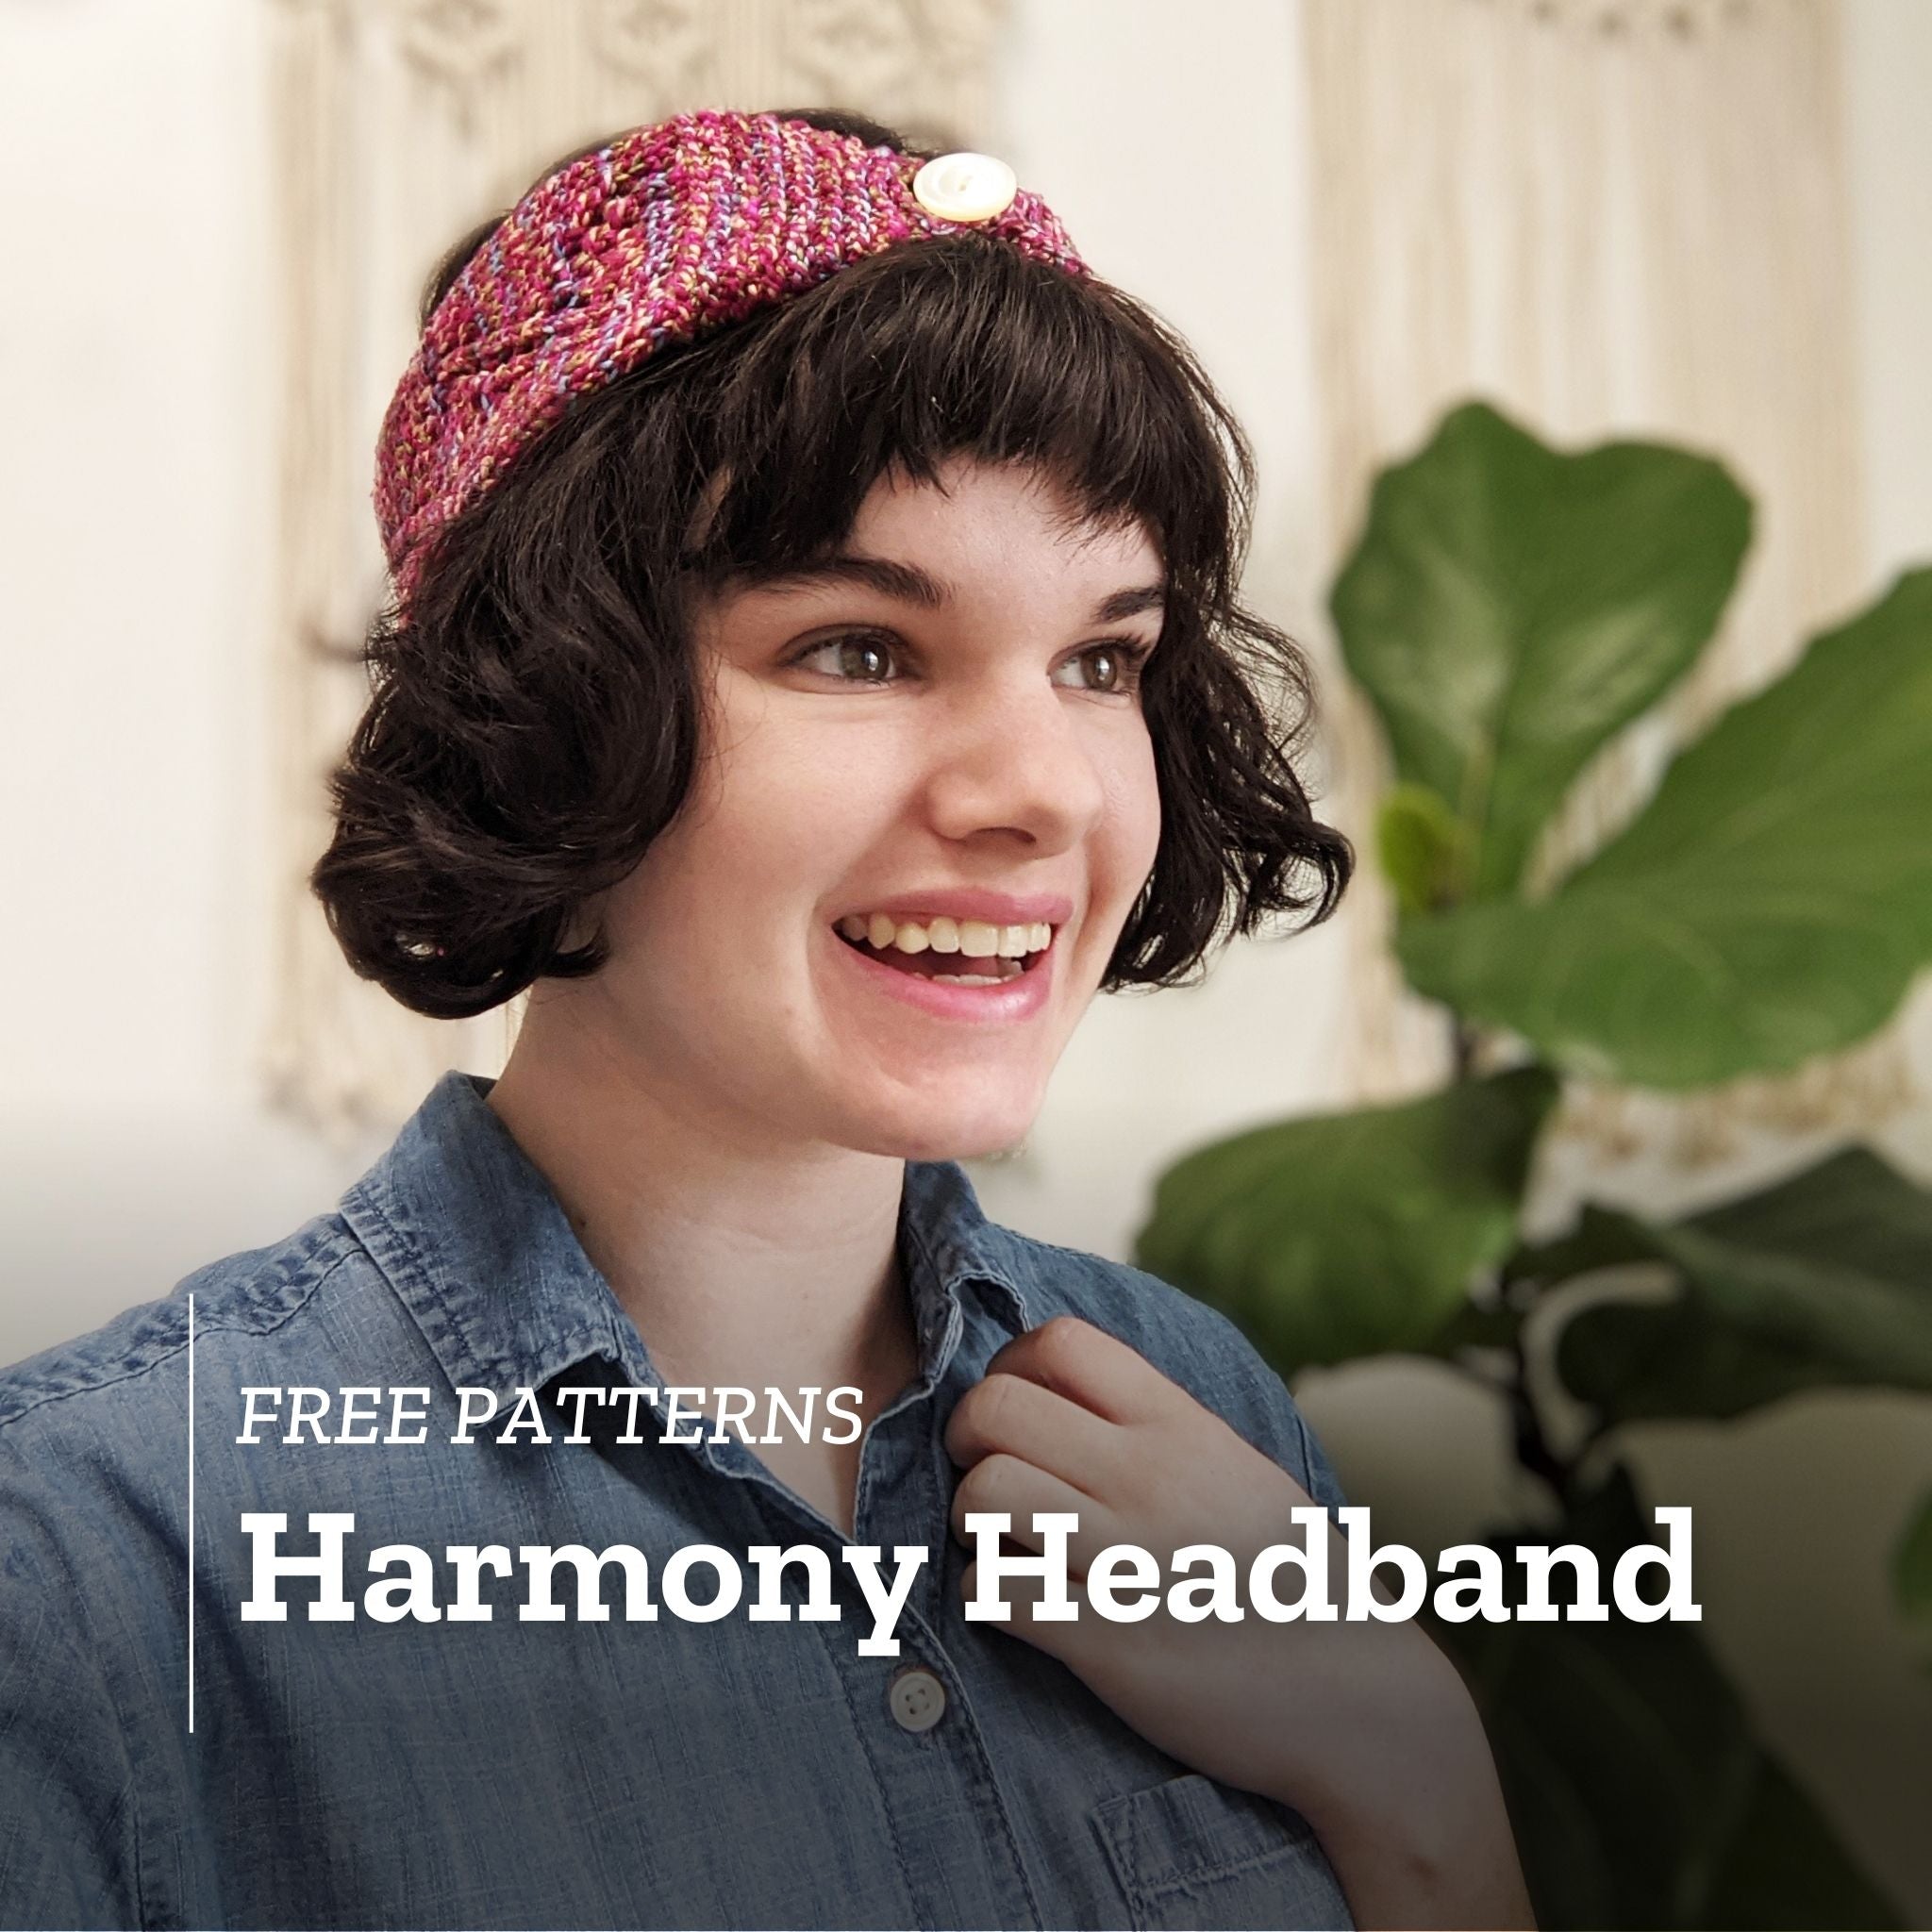 Free Pattern: Knit or Crochet The Harmony Headband - Darn Good Yarn